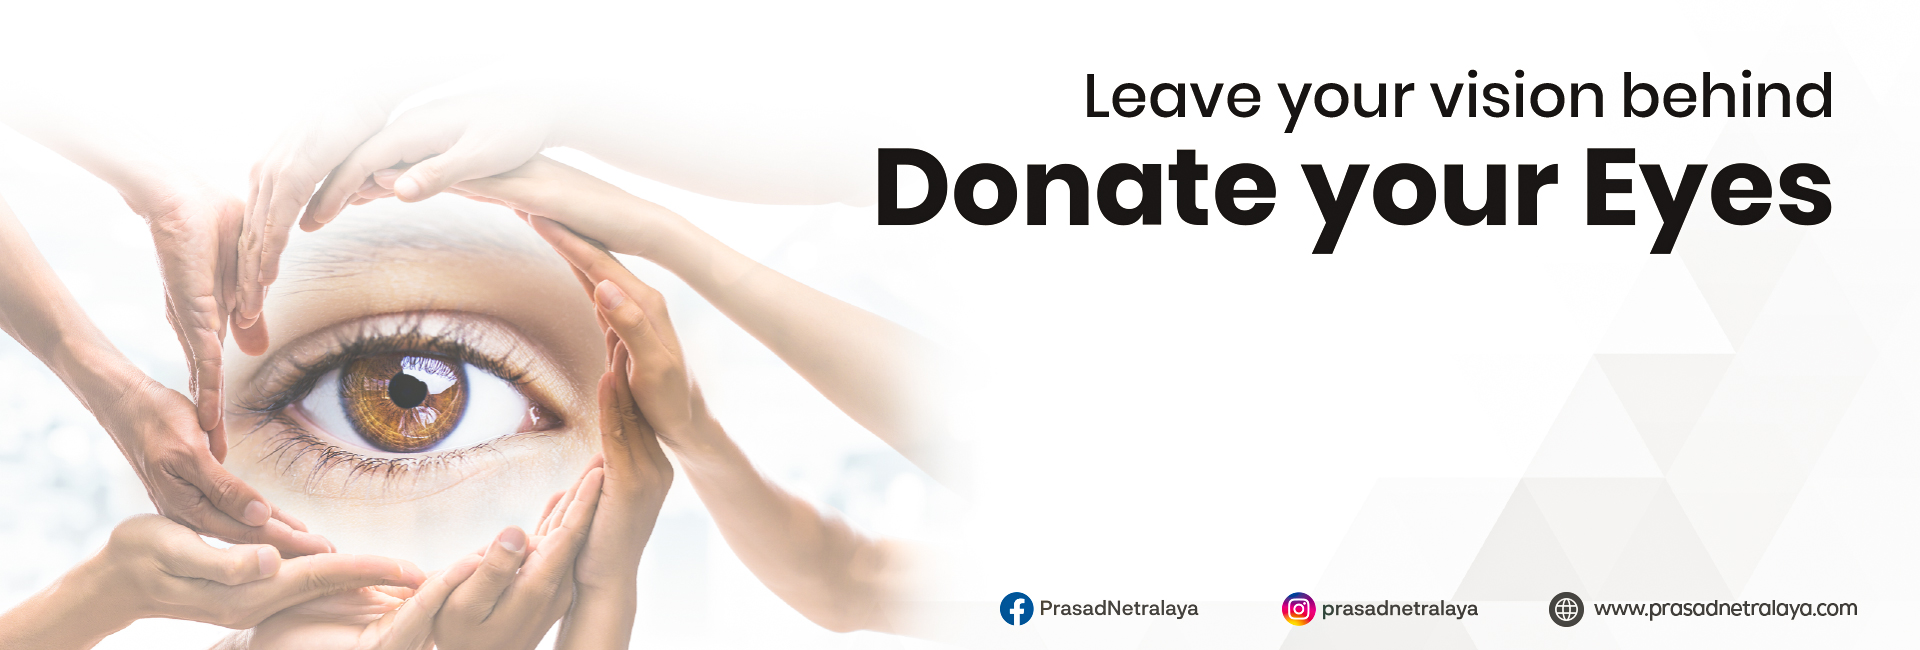 Prasad Netralaya - Eye donation